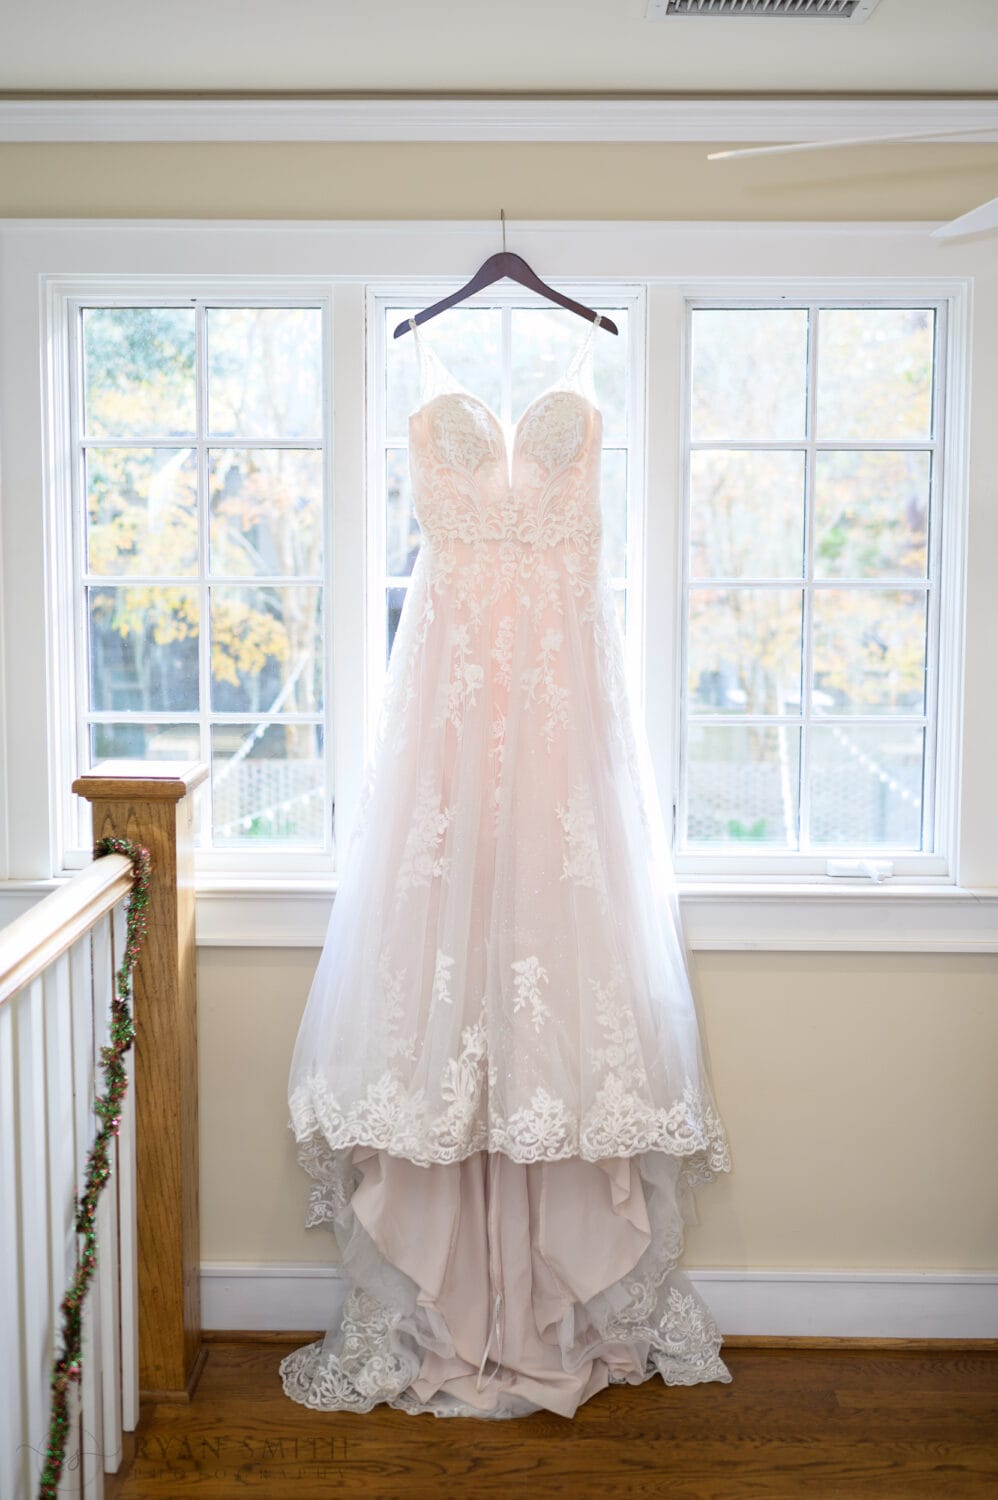 Dress hanging in the upstairs window - Brookgreen Gardens